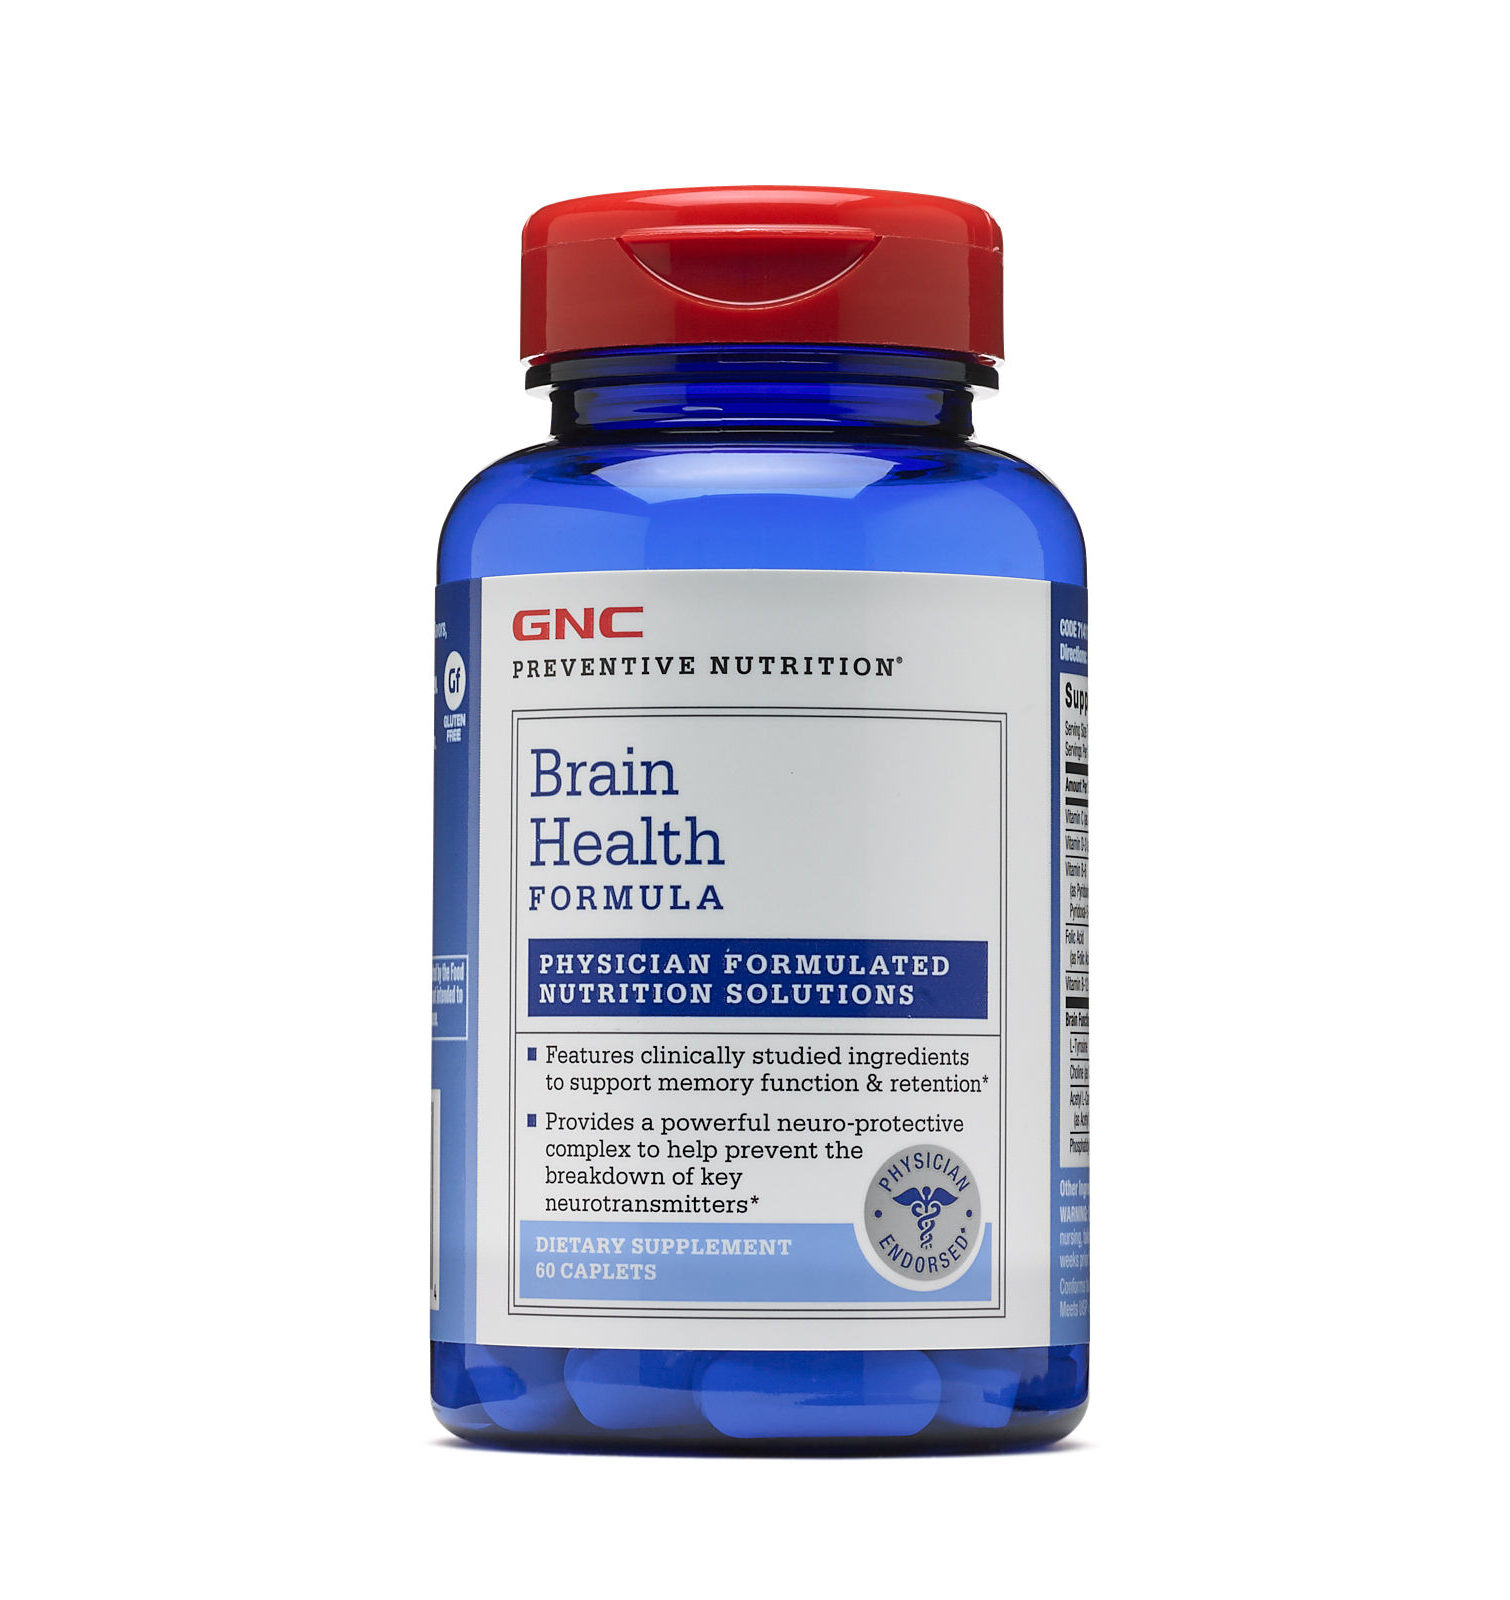 GNC Preventive Nutrition Brain Health Formula Review.